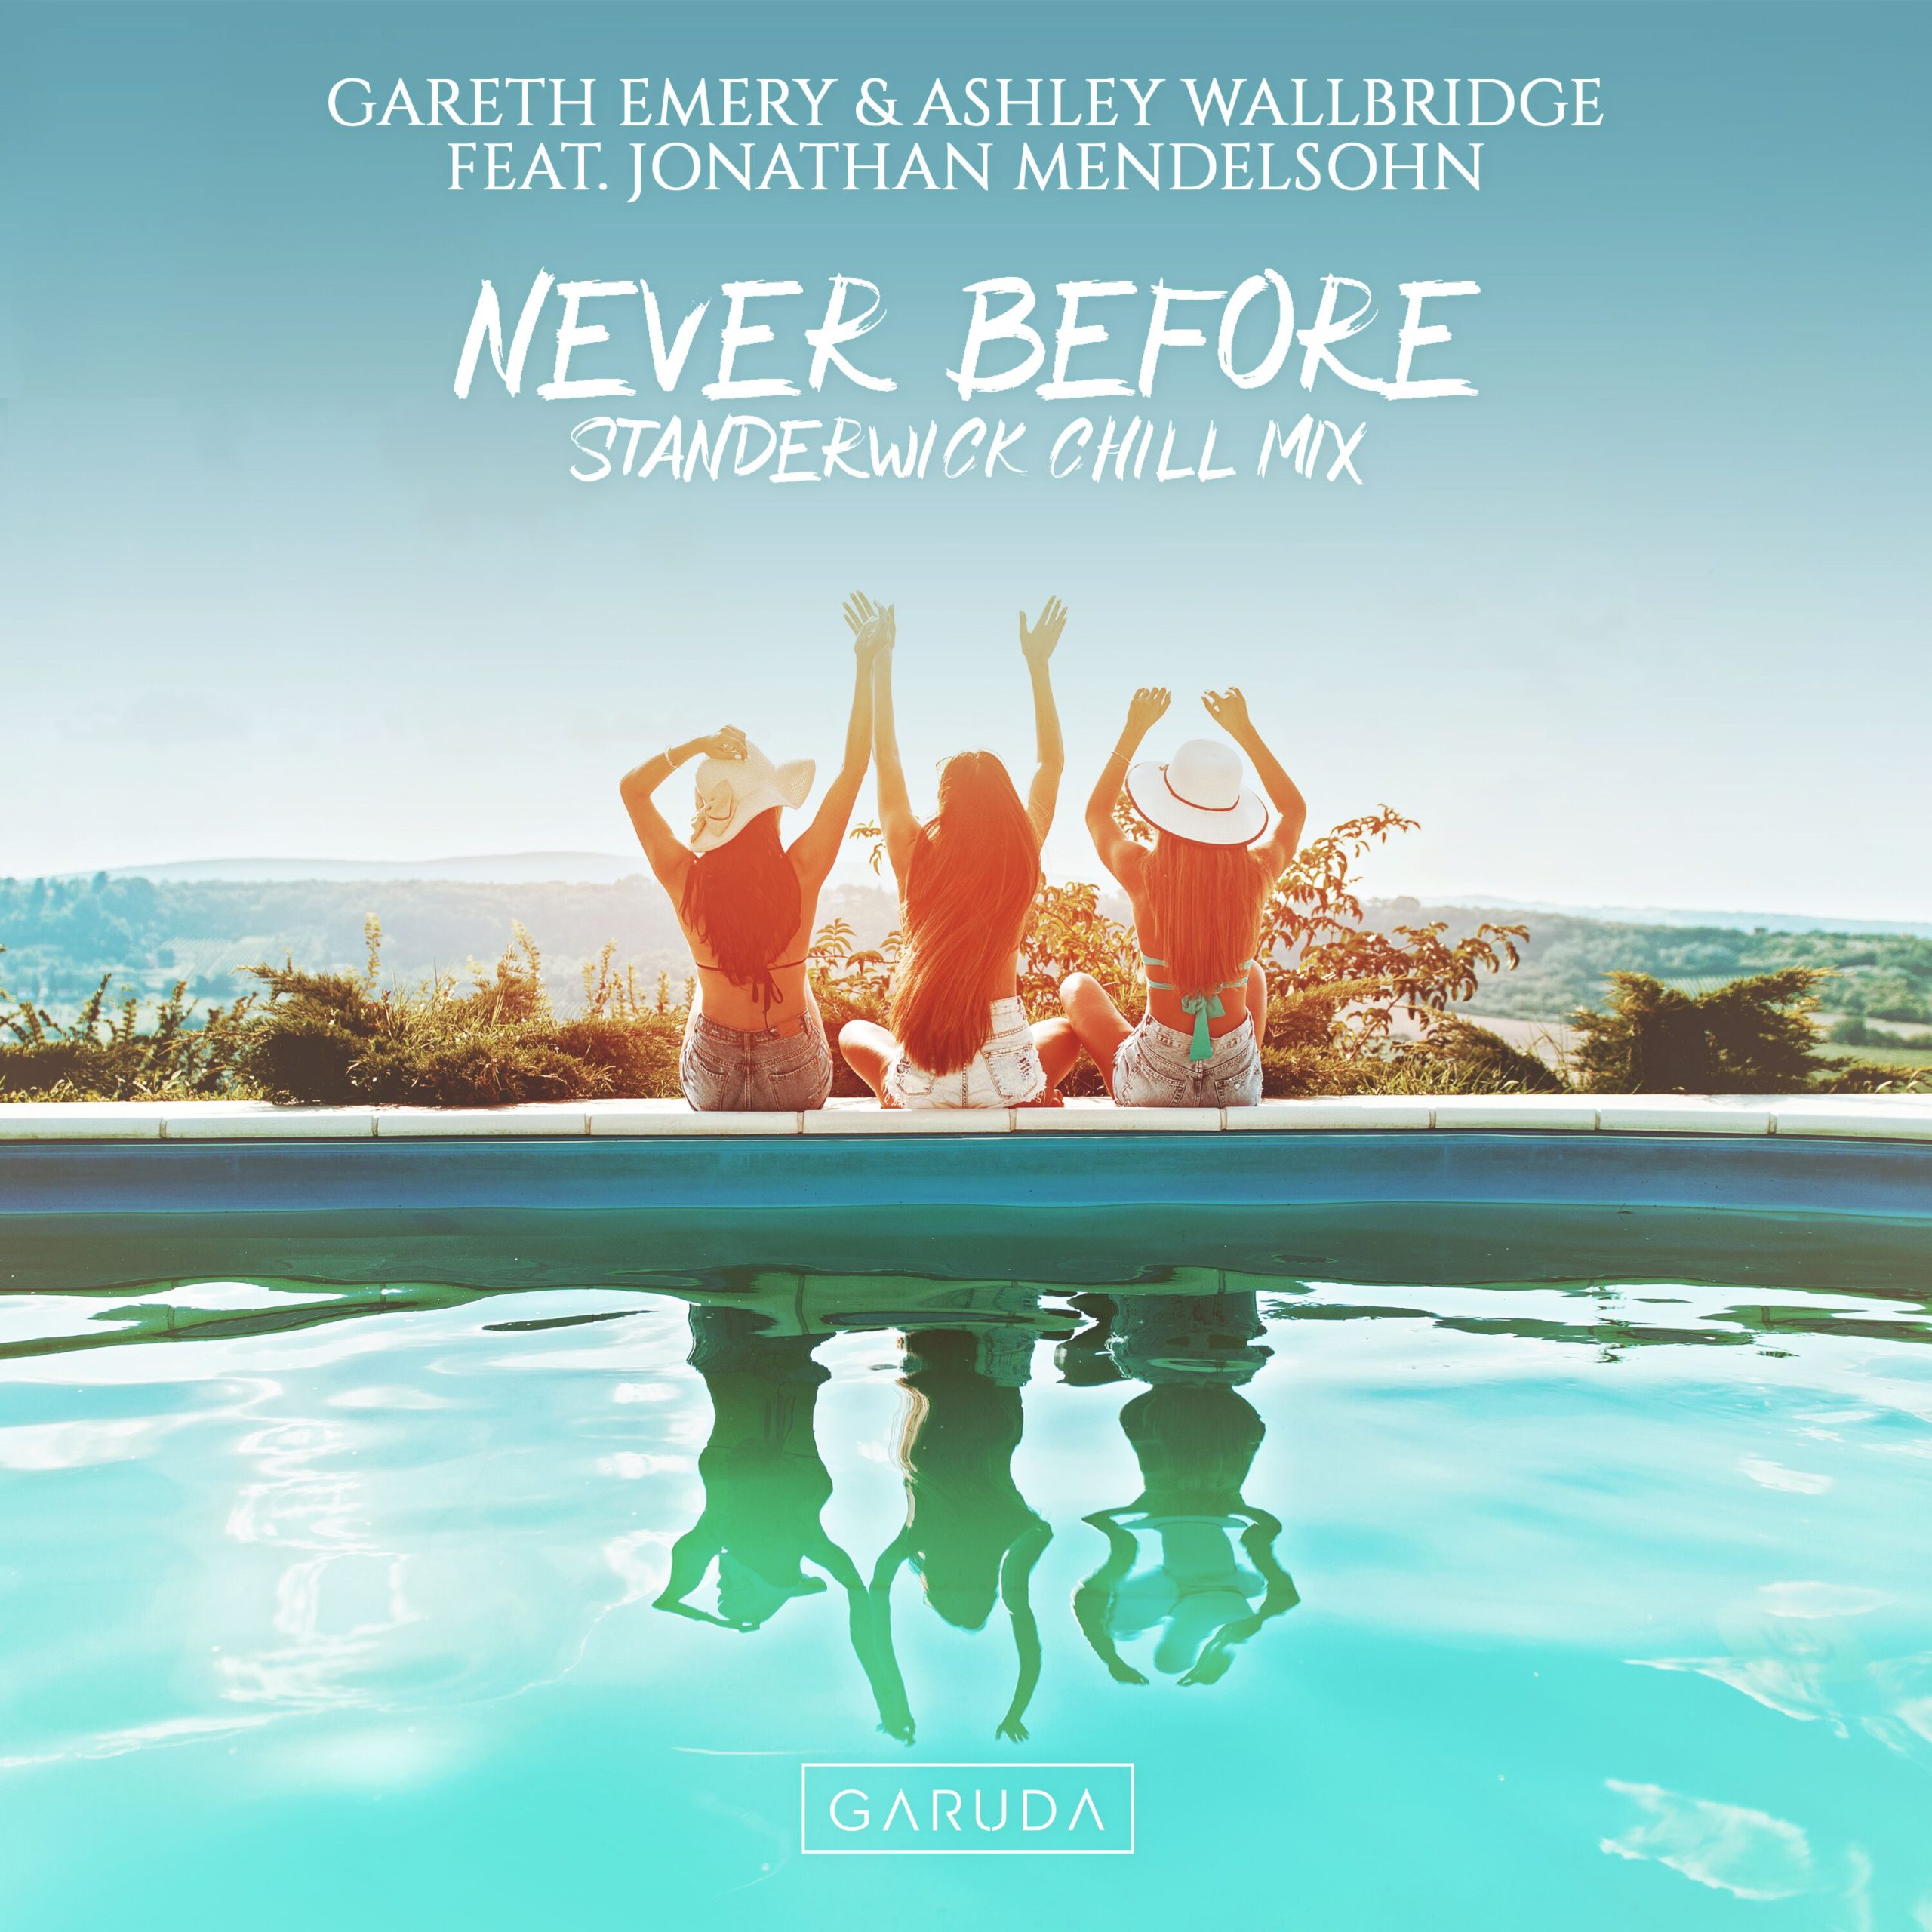 Gareth Emery and Ashley Wallbridge feat. Jonathan Mendelsohn presents Never Before (STANDERWICK Chill Mix) on Garuda